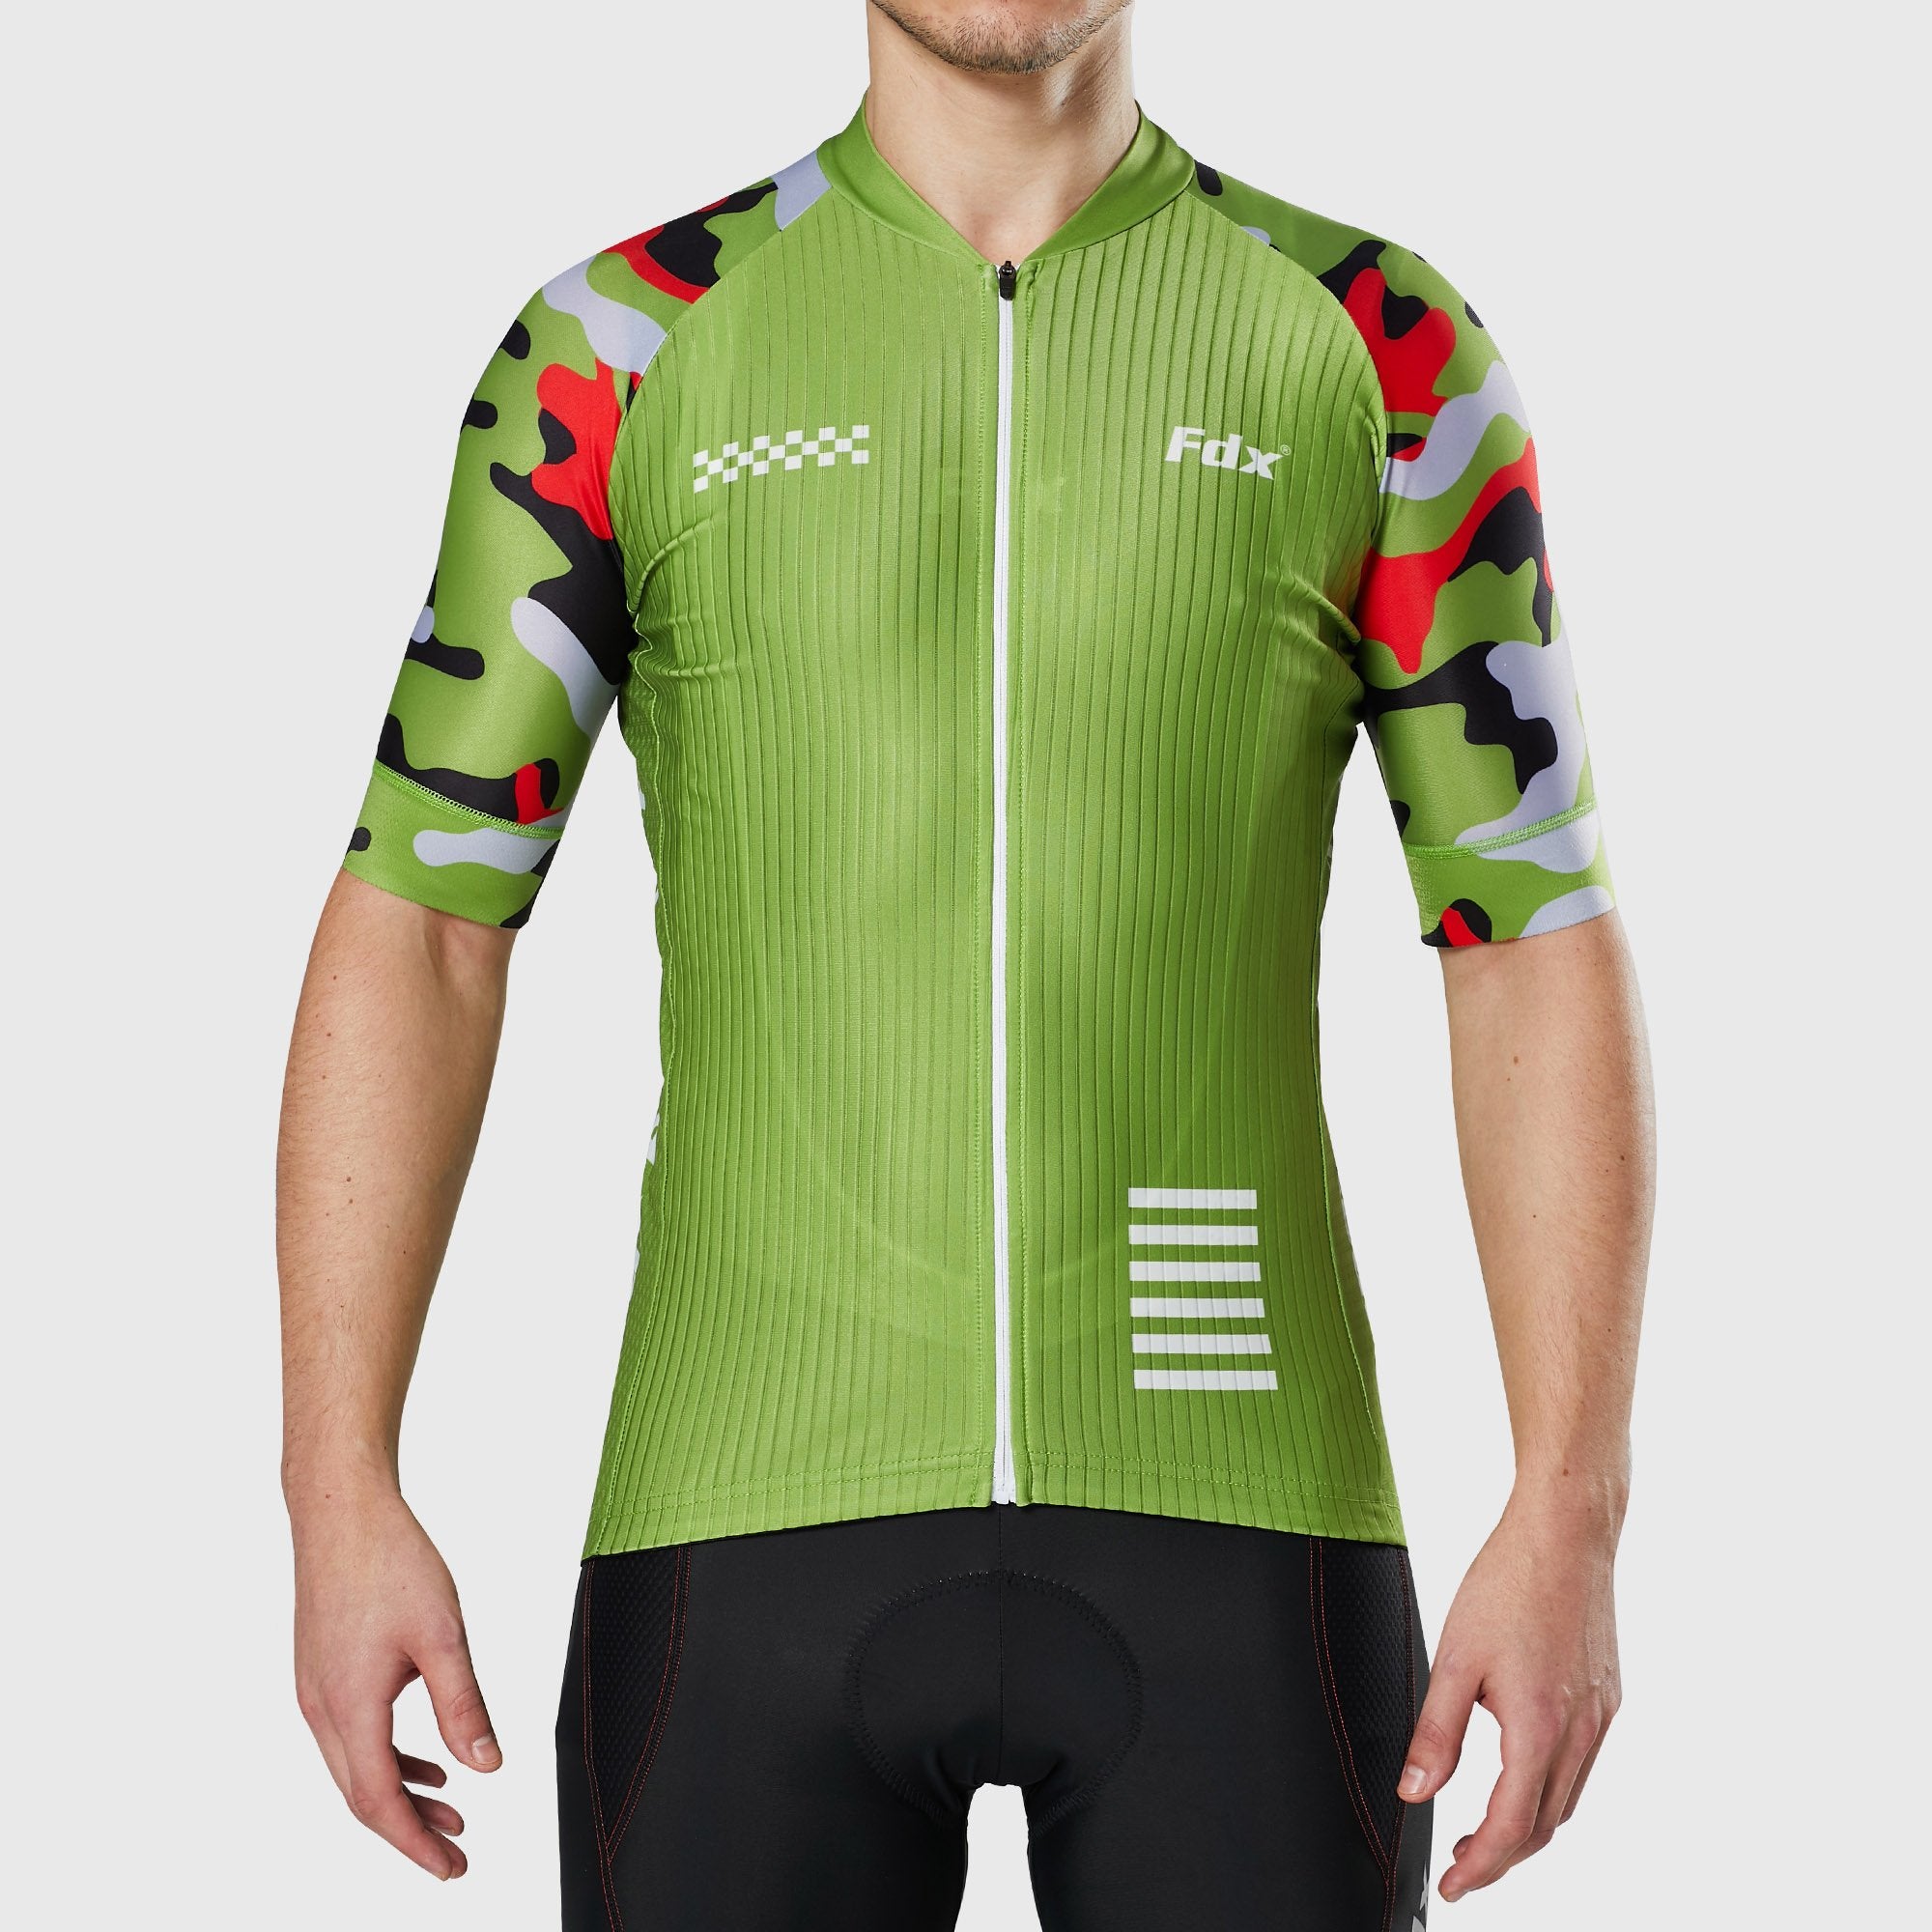 Fdx Camouflage Green Men's Short Sleeve Summer Cycling Jersey